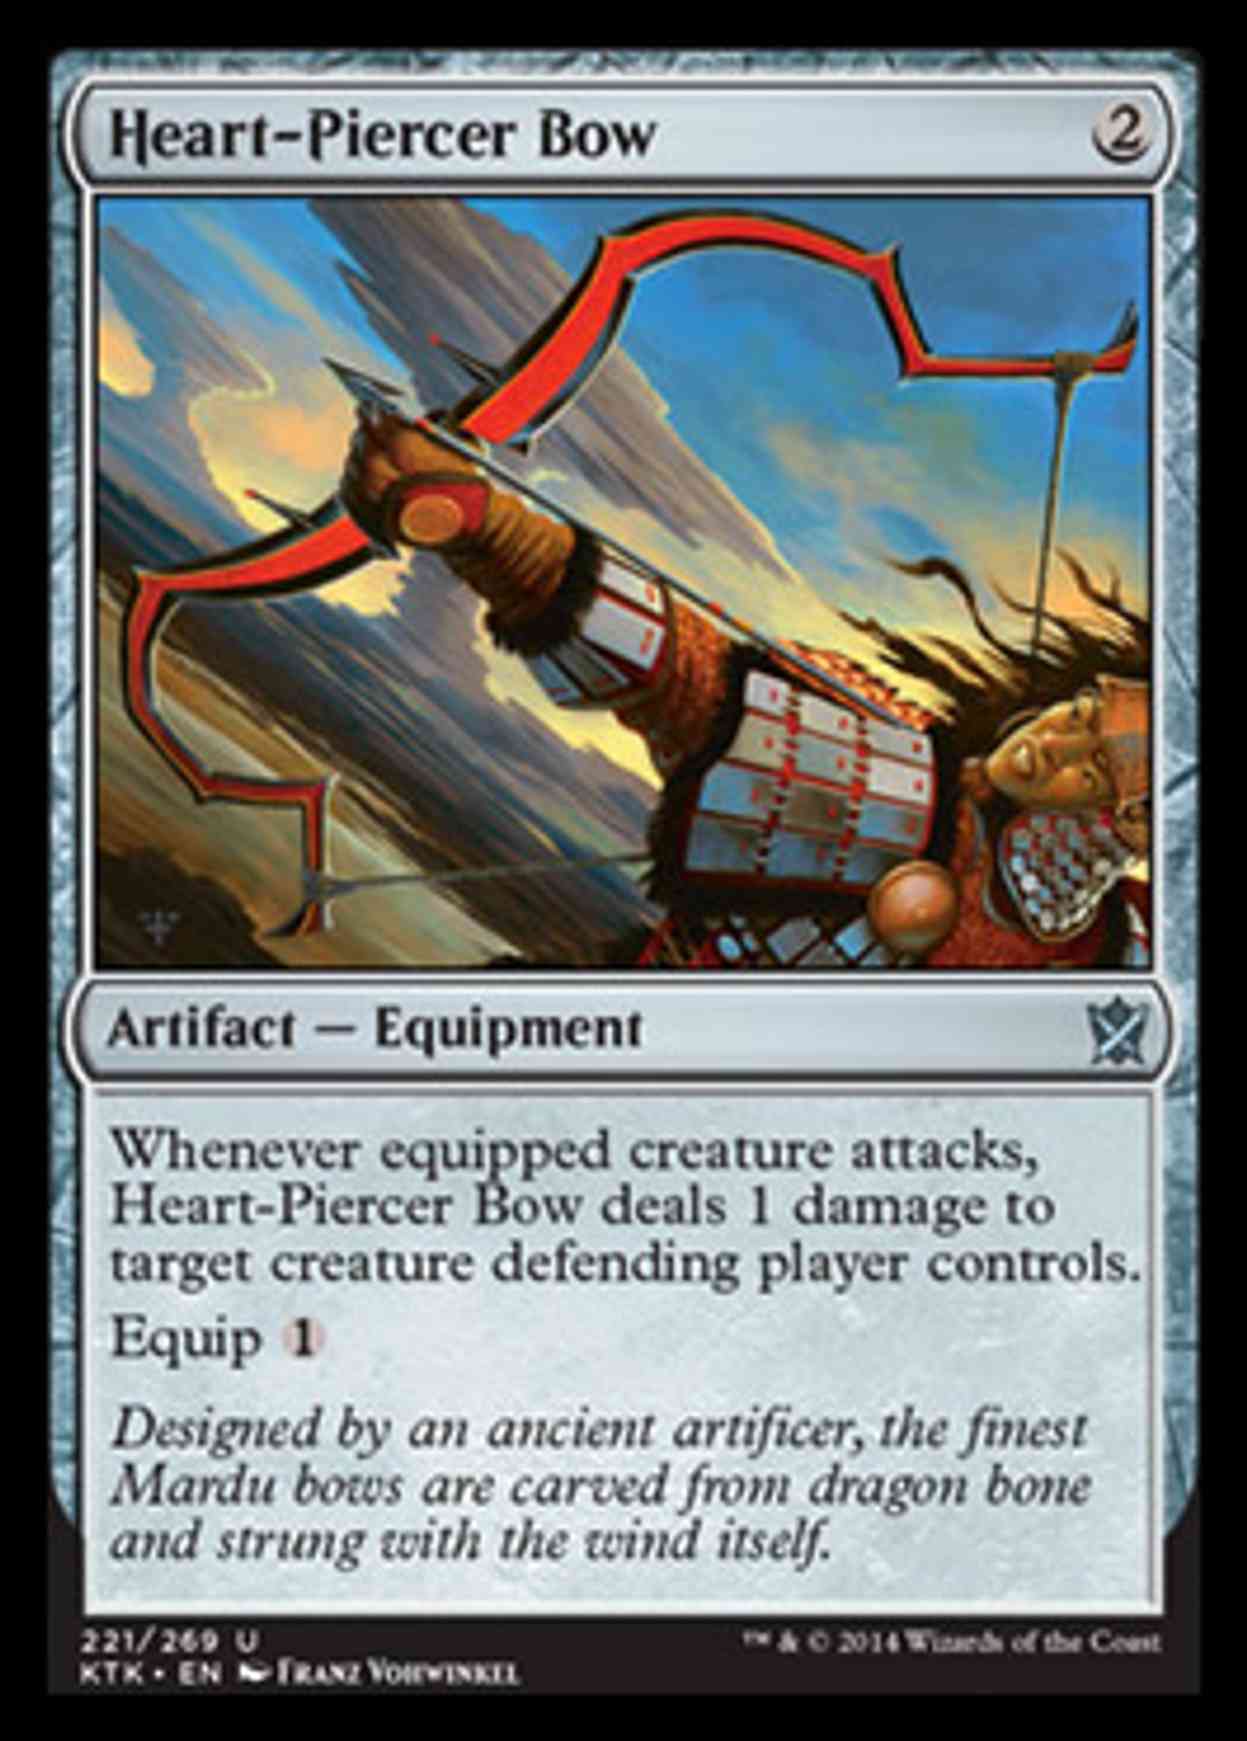 Heart-Piercer Bow magic card front